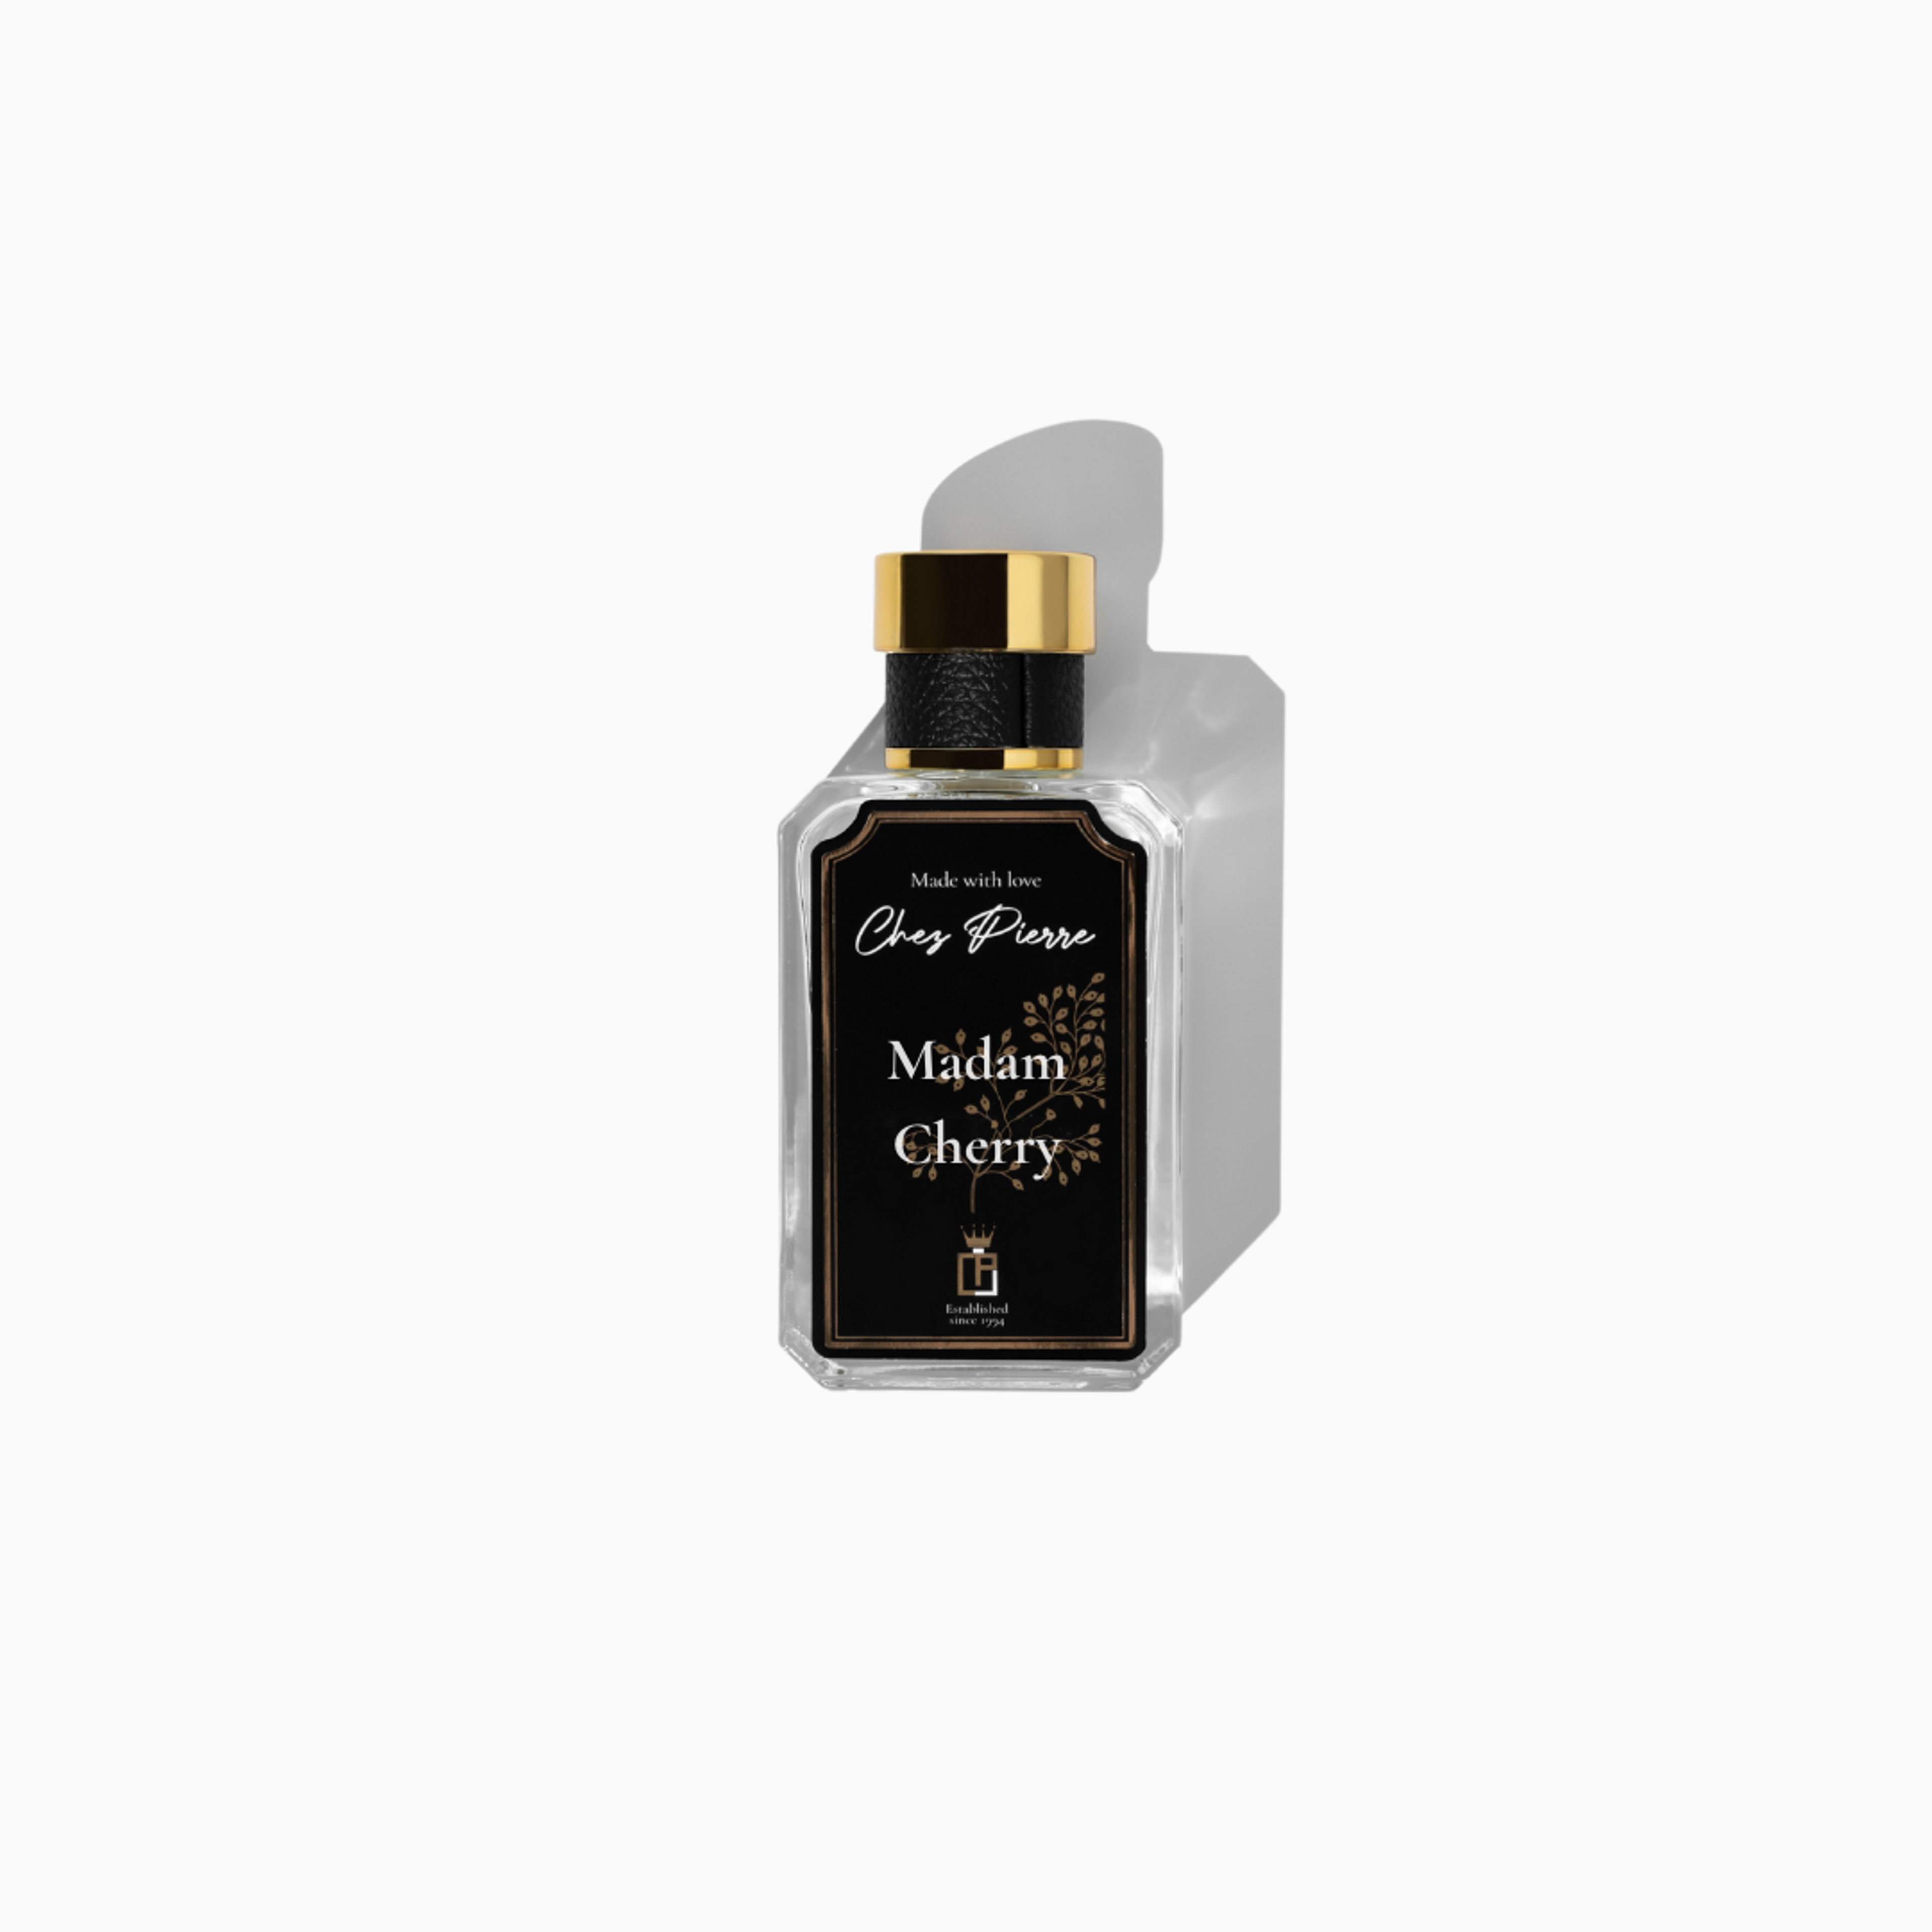 Chez Pierre's Madam Cherry Perfume Inspired By Miss Dior Cherie